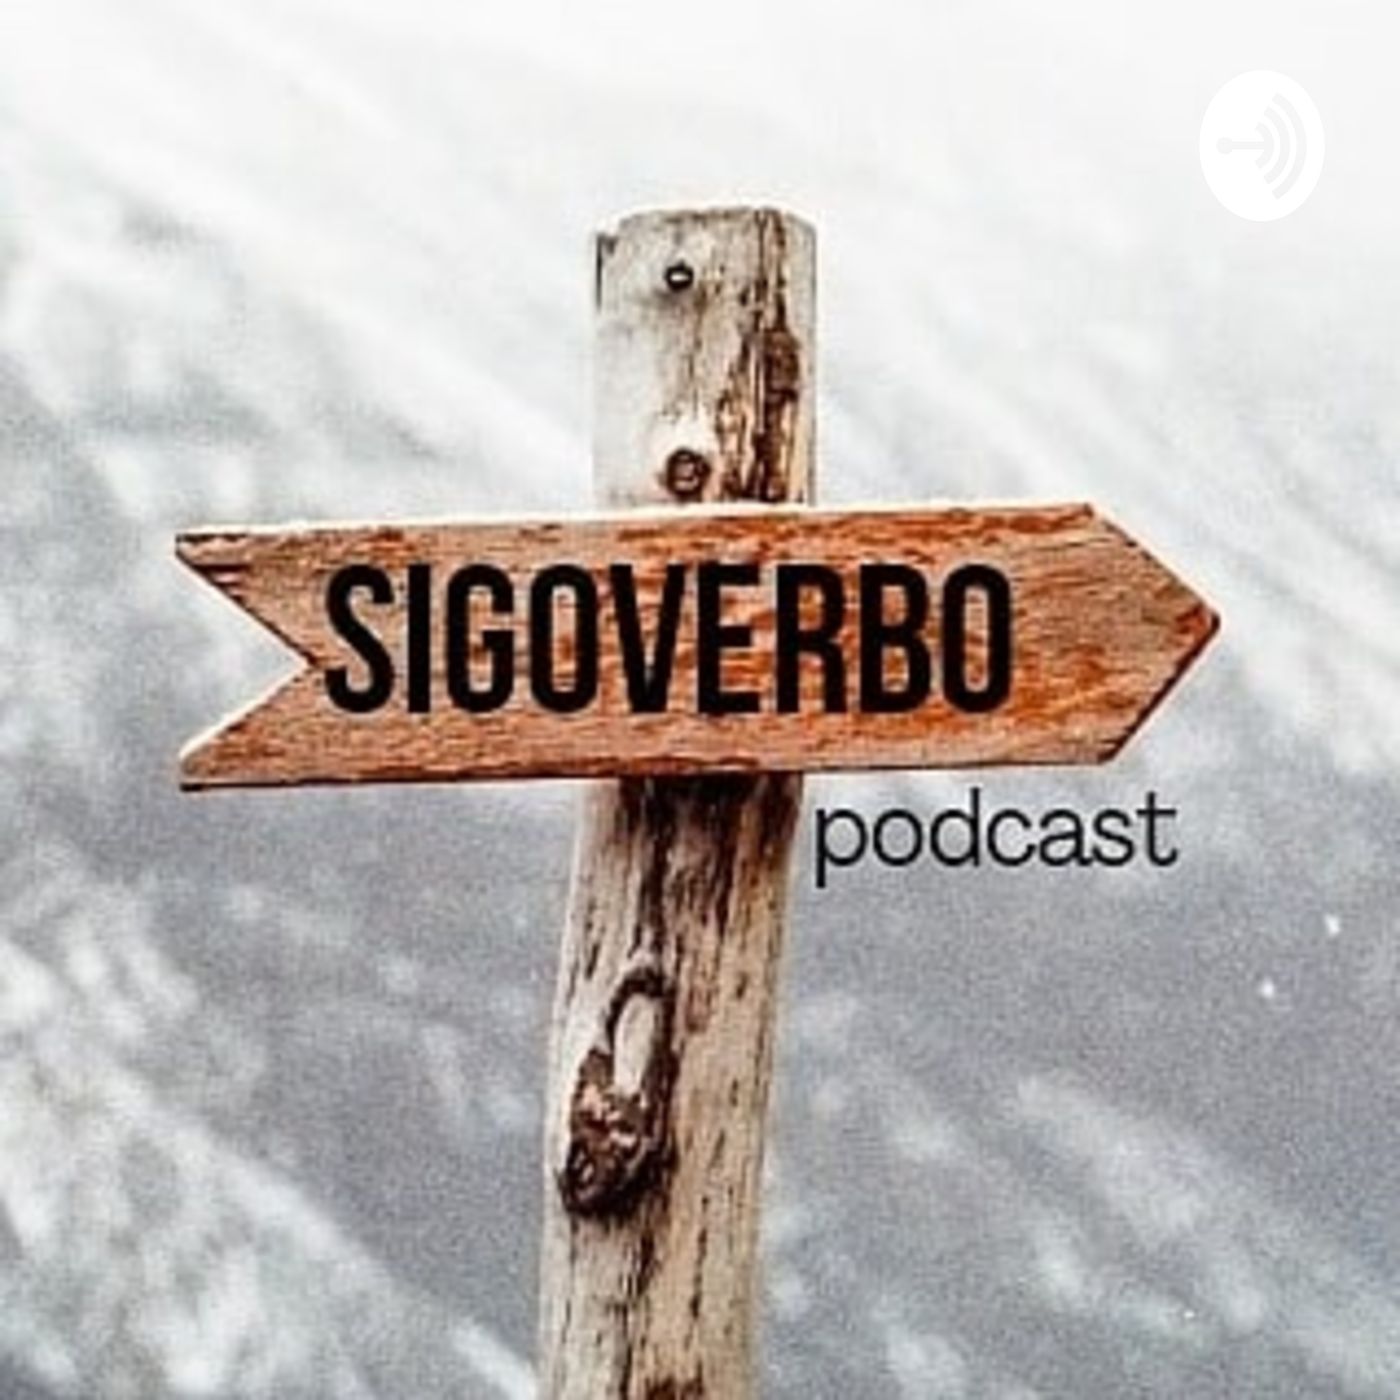 SigoVerbo Podcast